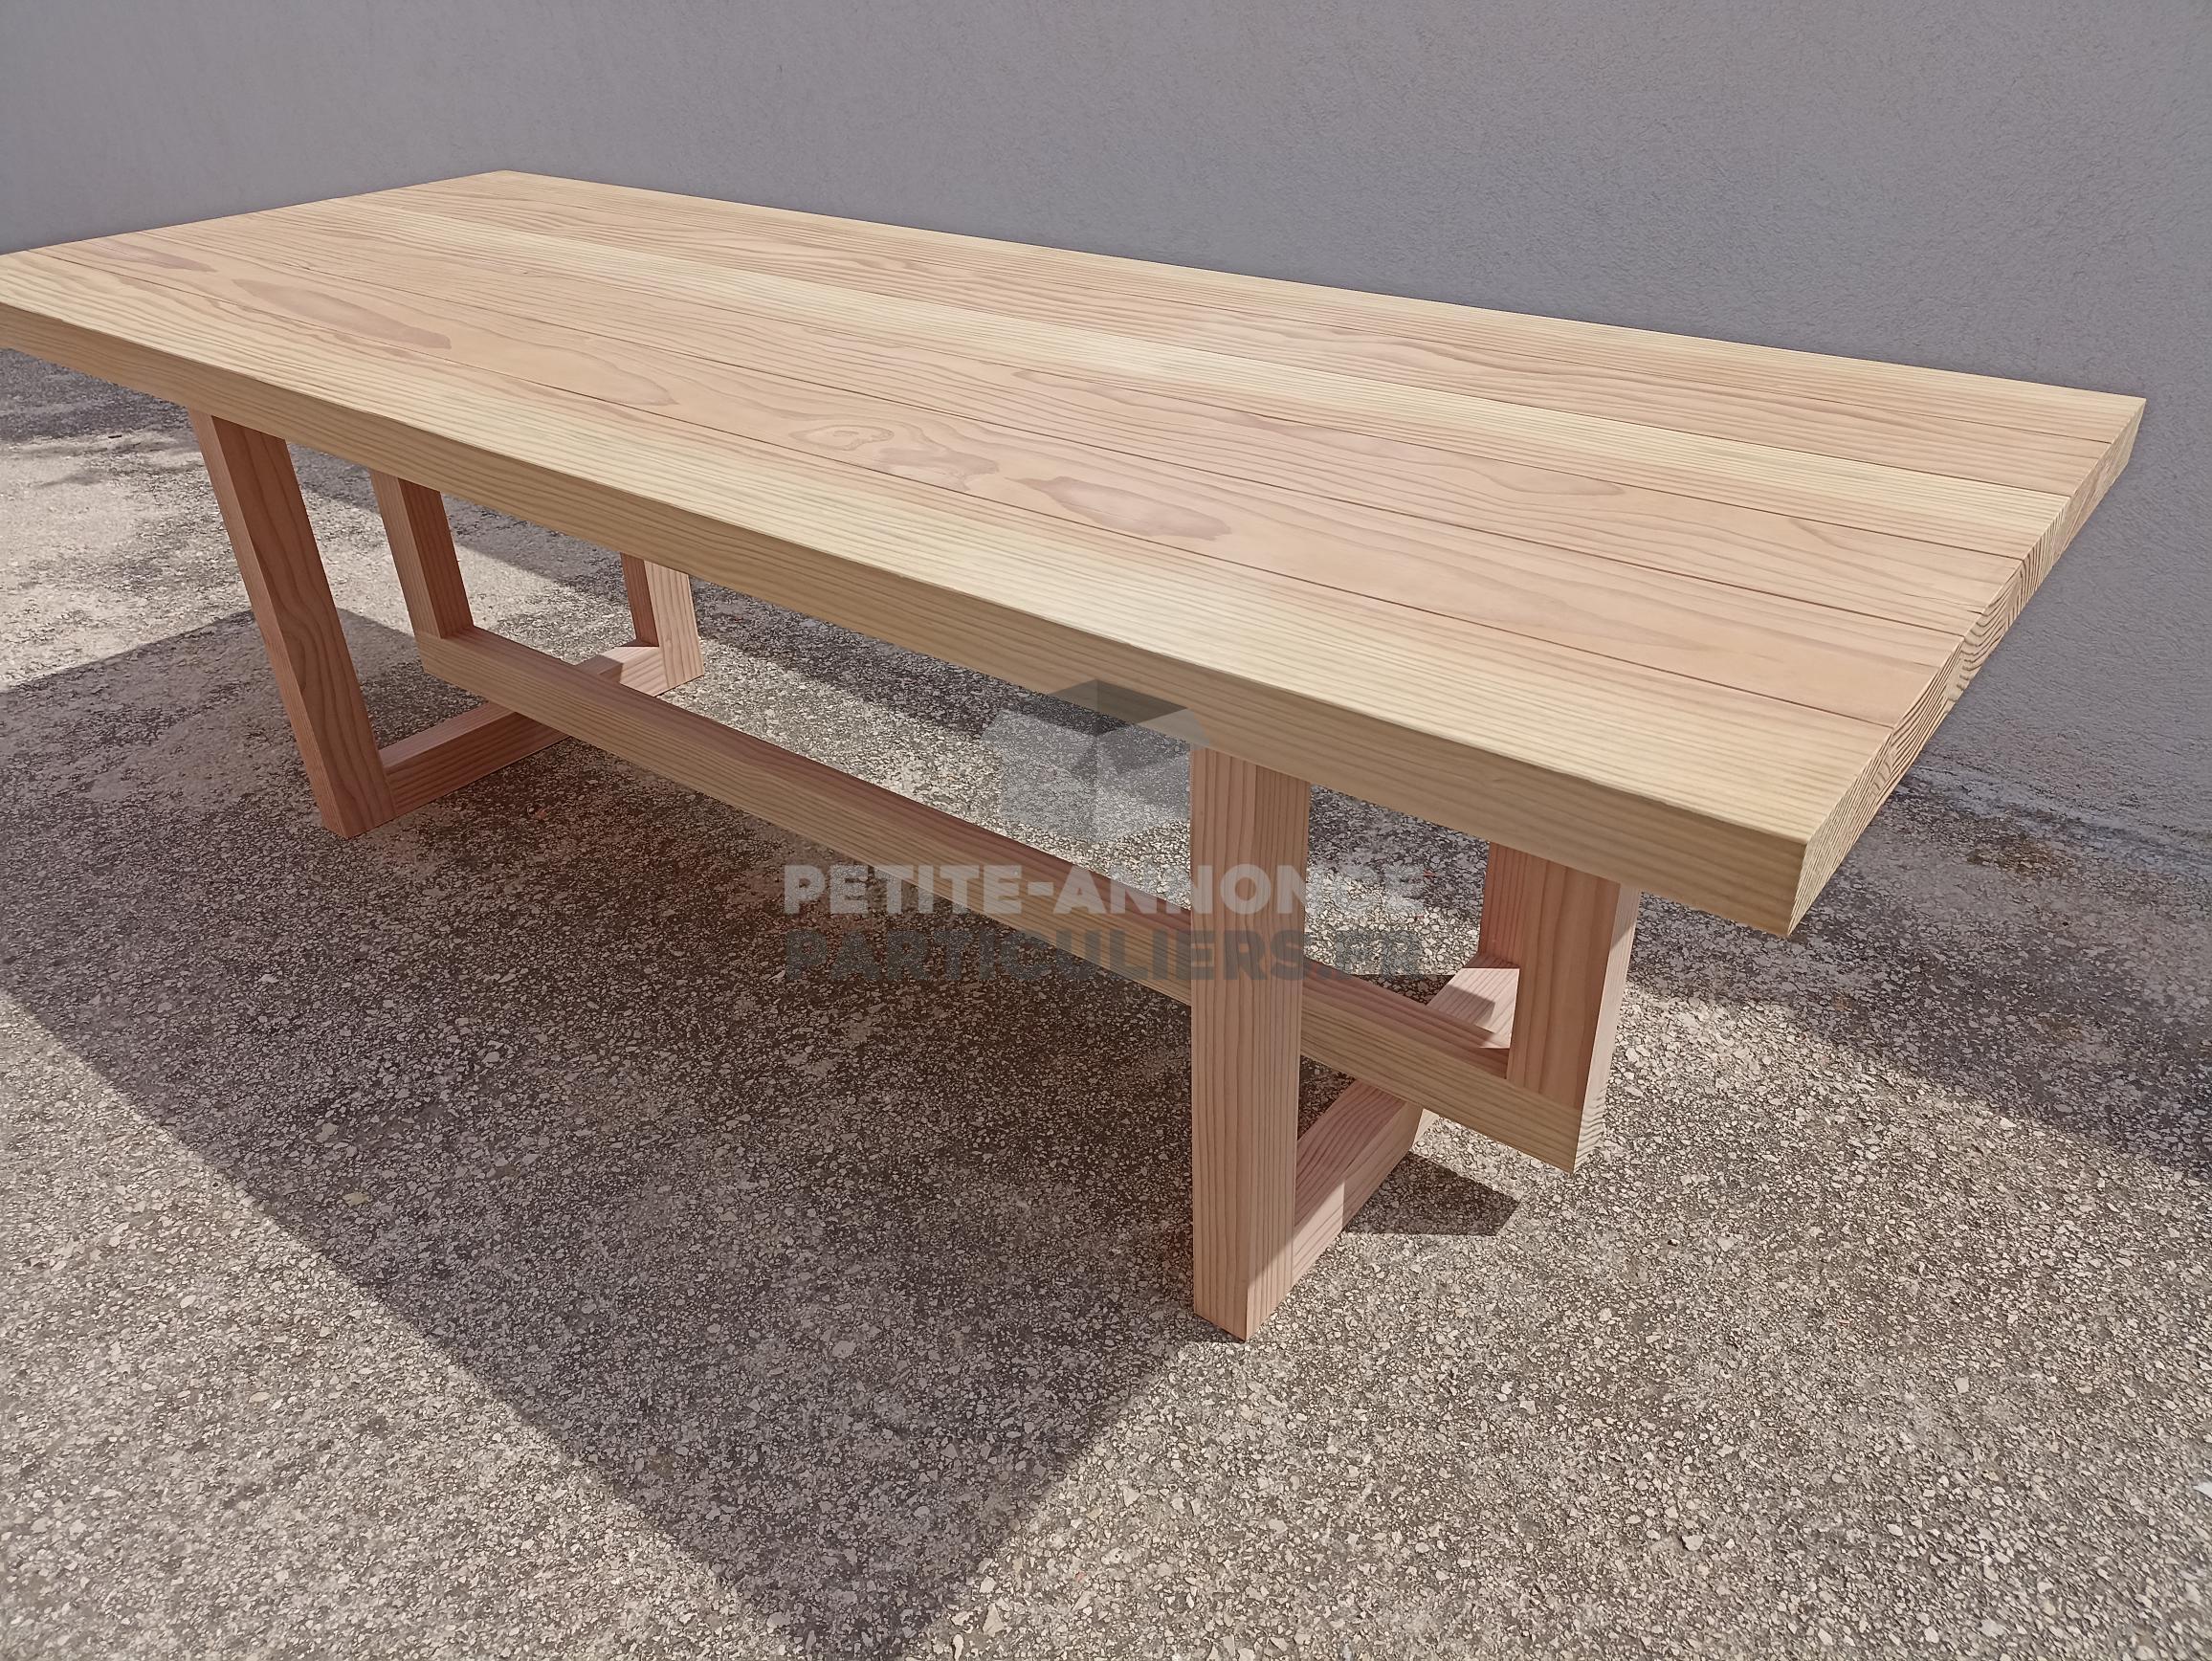 Table en bois douglas fabrication sur mesure